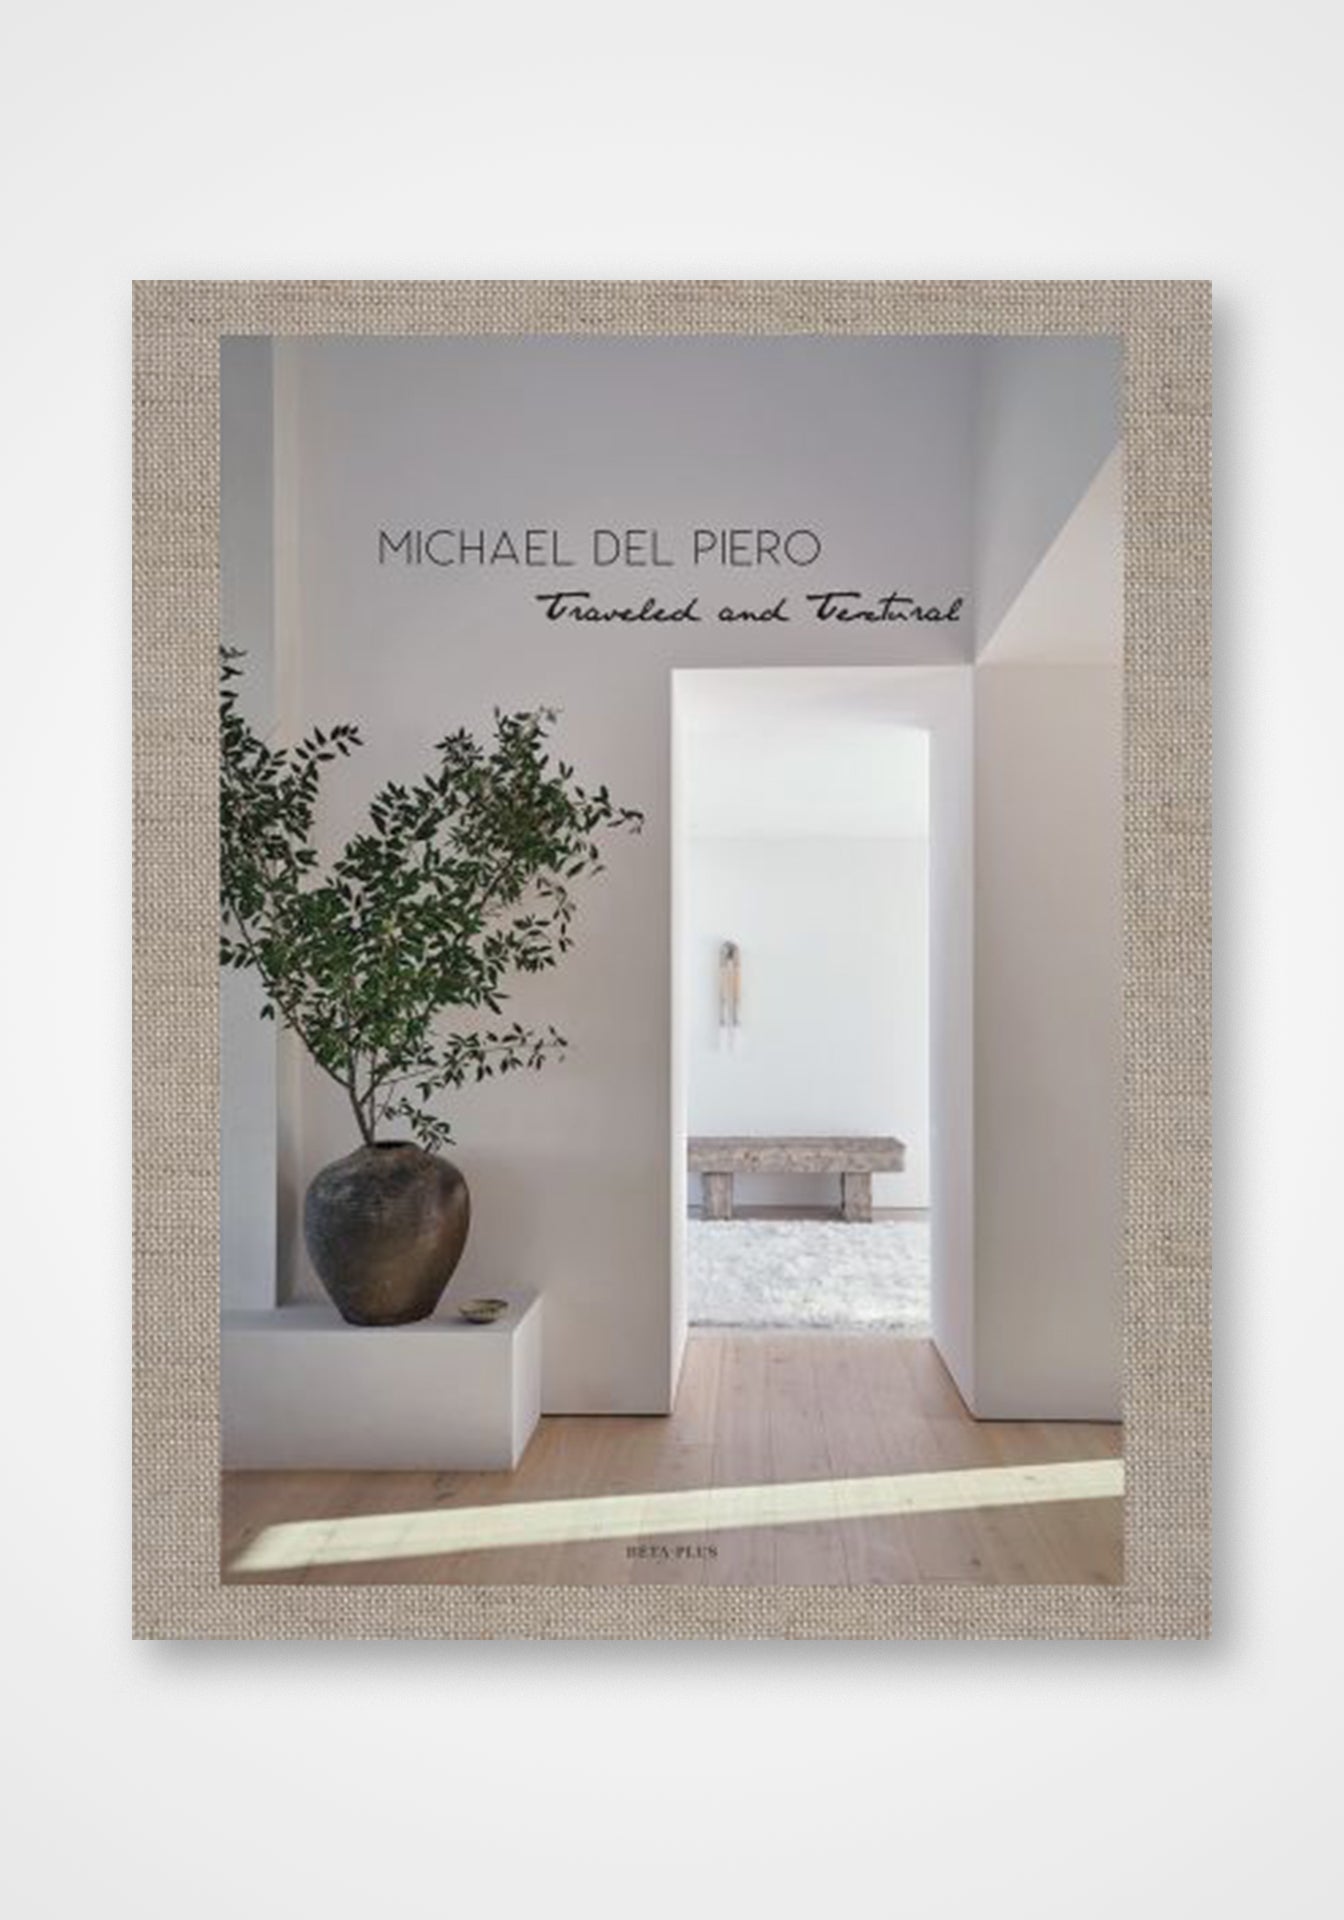 Michael del Piero: Traveled + Textural